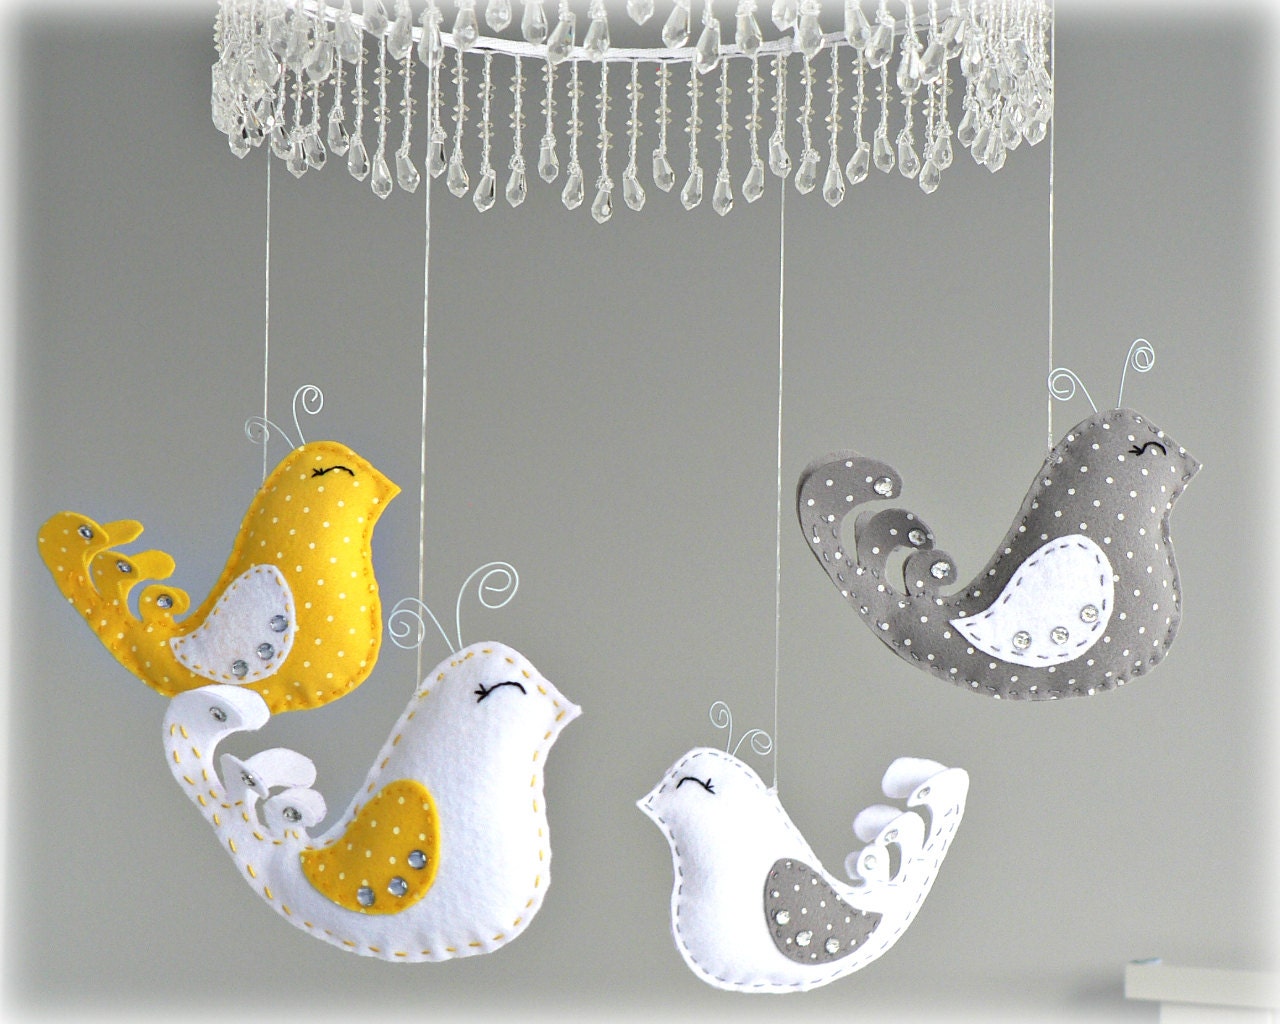 Bird mobile - baby mobile - You pick your colors - yellow, gray and white - polka dot felt - nursery decor - LullabyMobiles